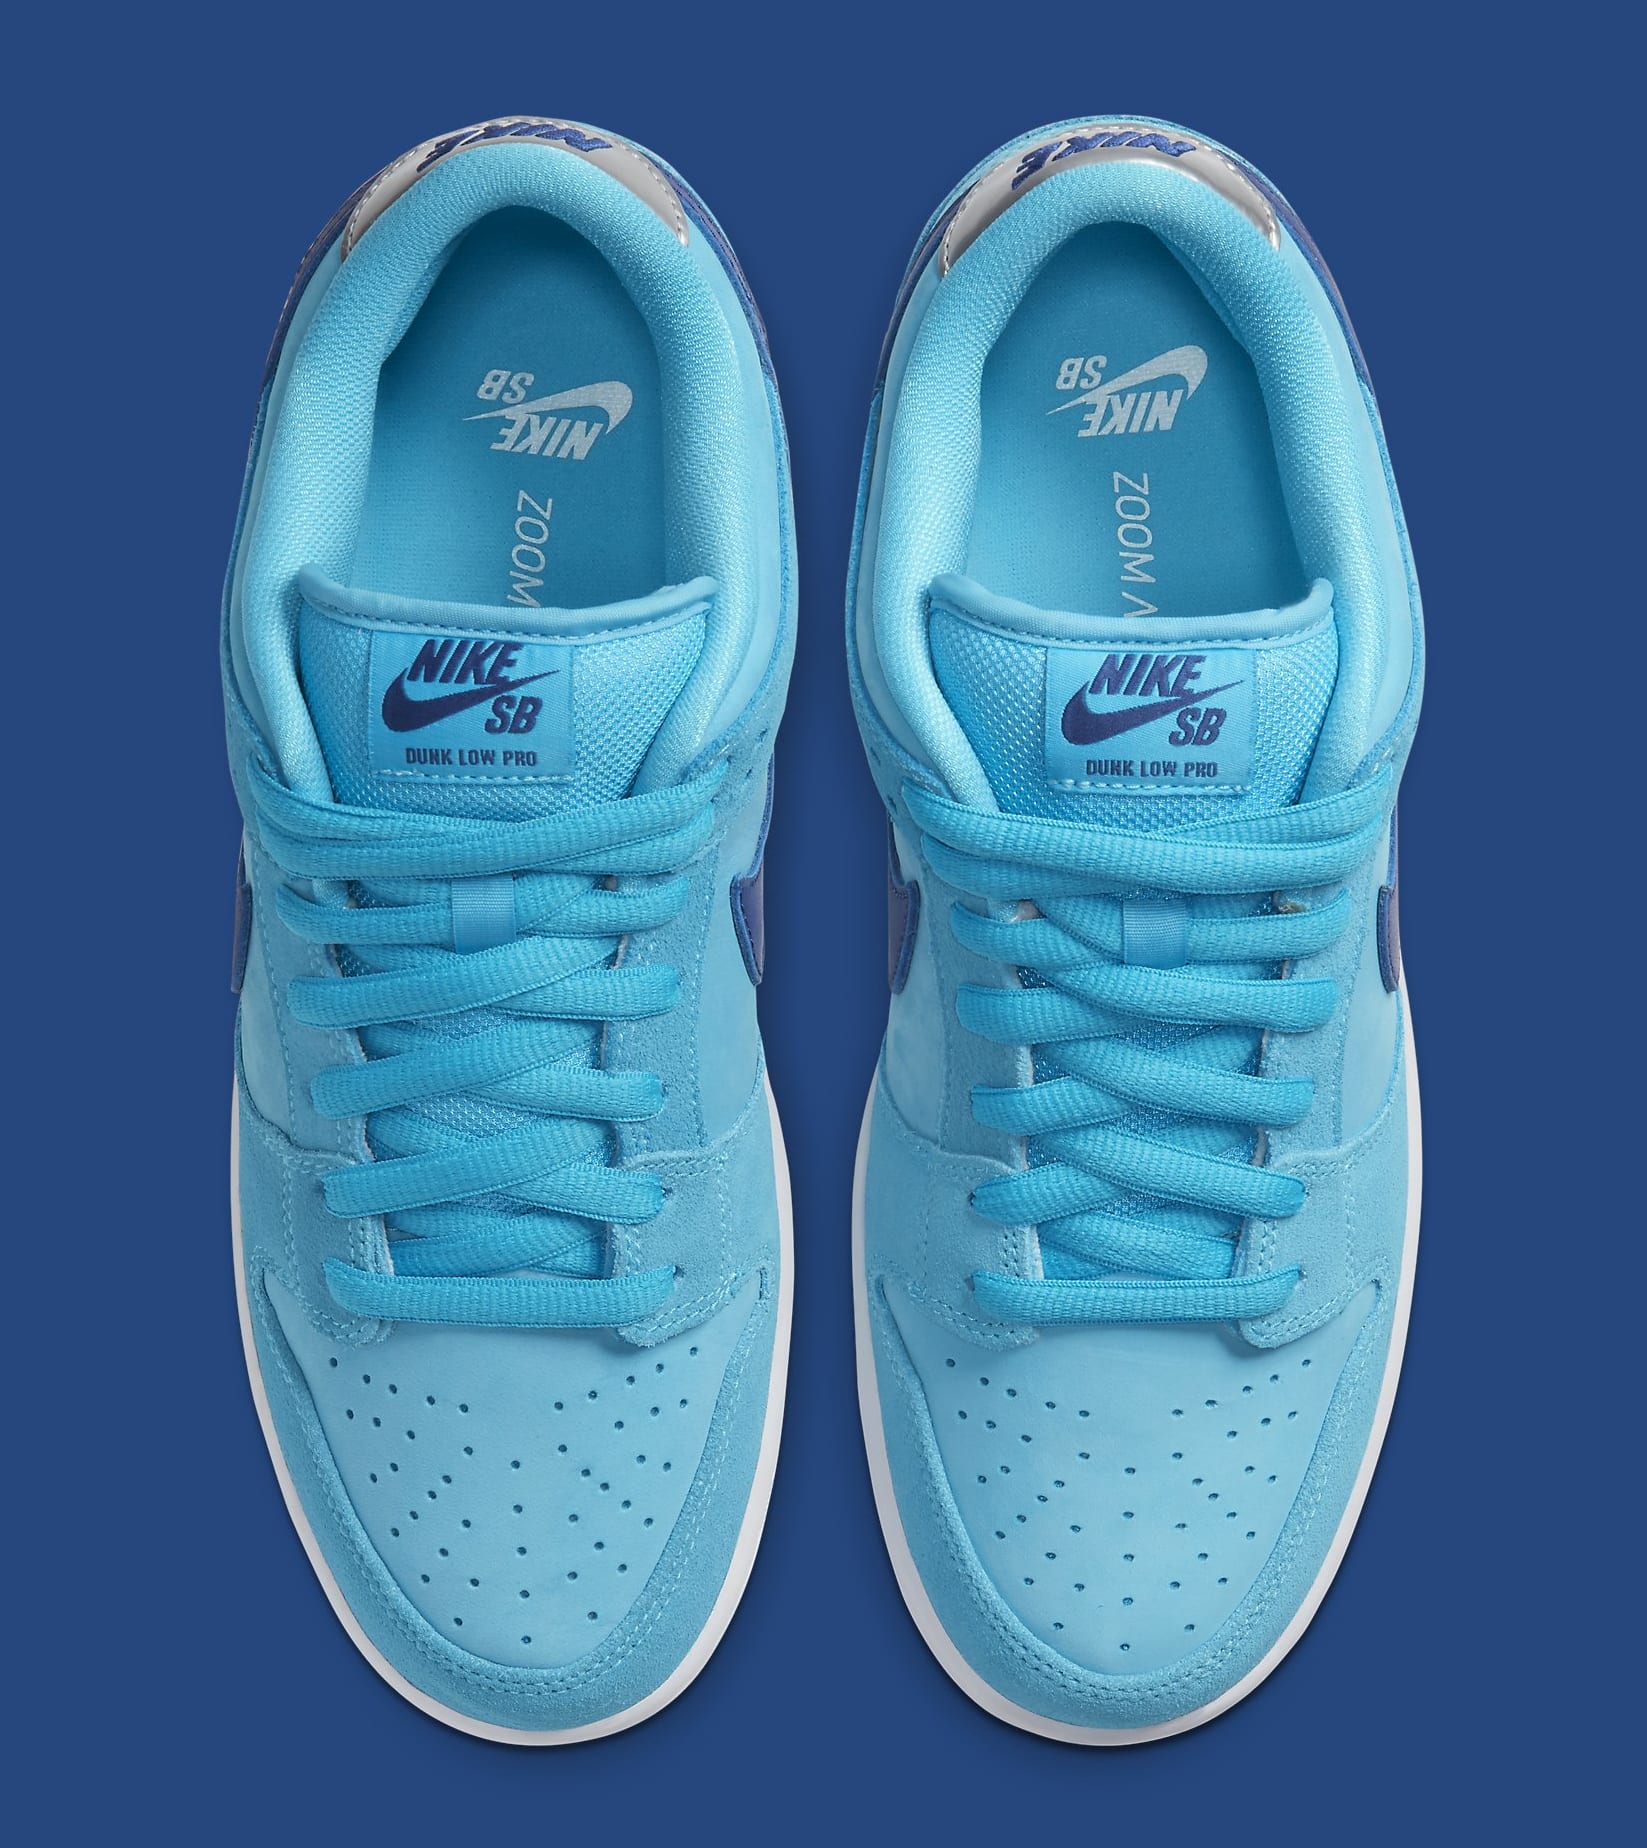 Nike SB Dunk Low Blue Fury BQ6817-400 Release Info